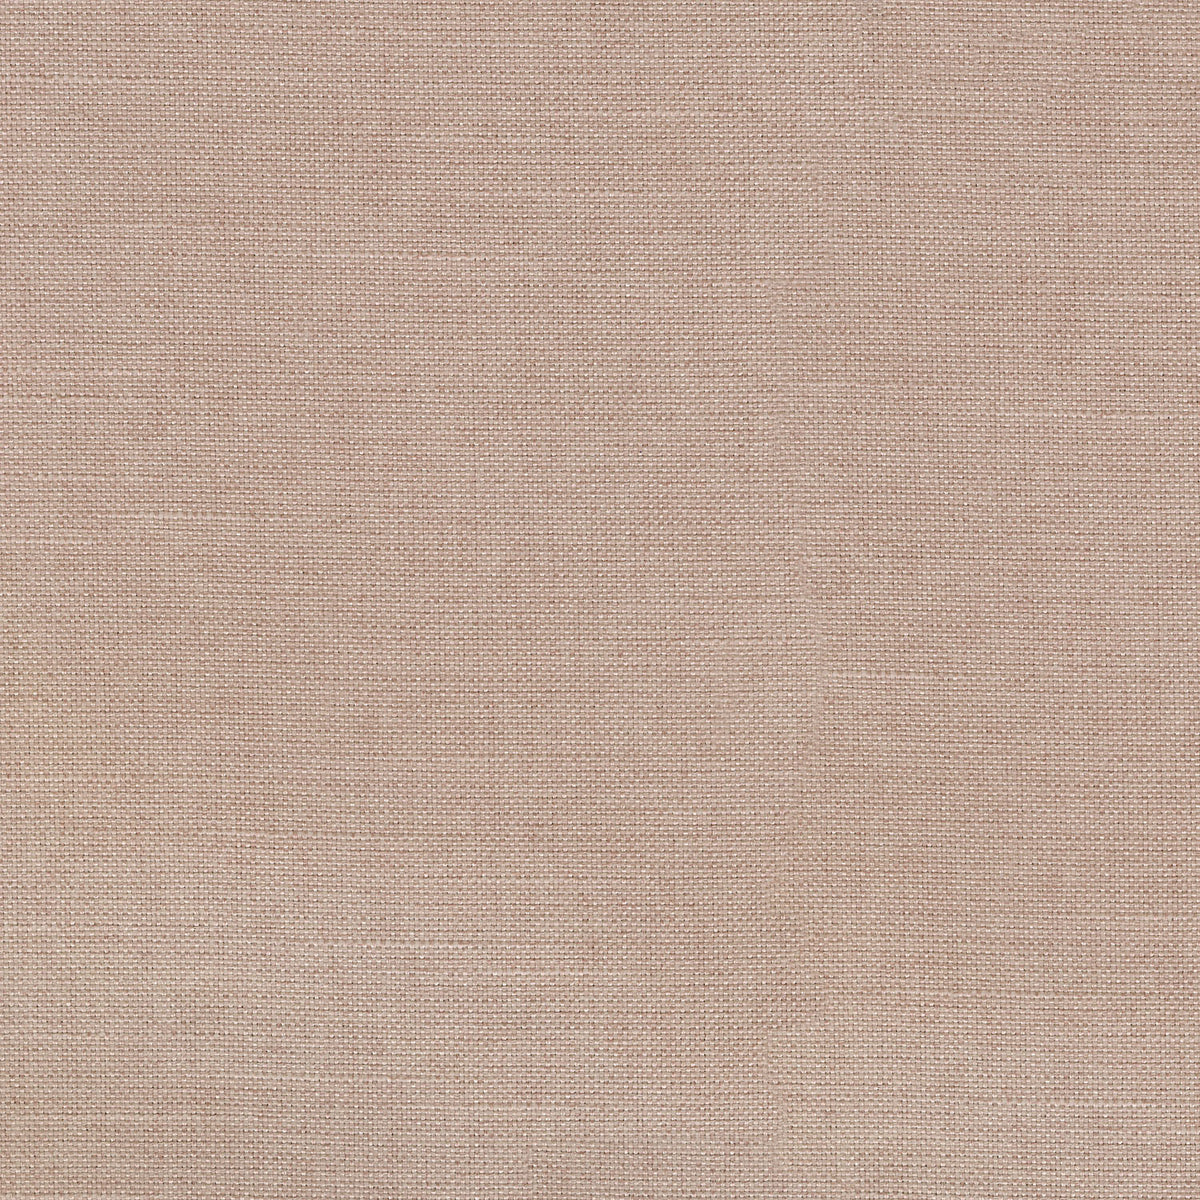 P/K Lifestyles Reba - Rose Quartz 409123 Upholstery Fabric